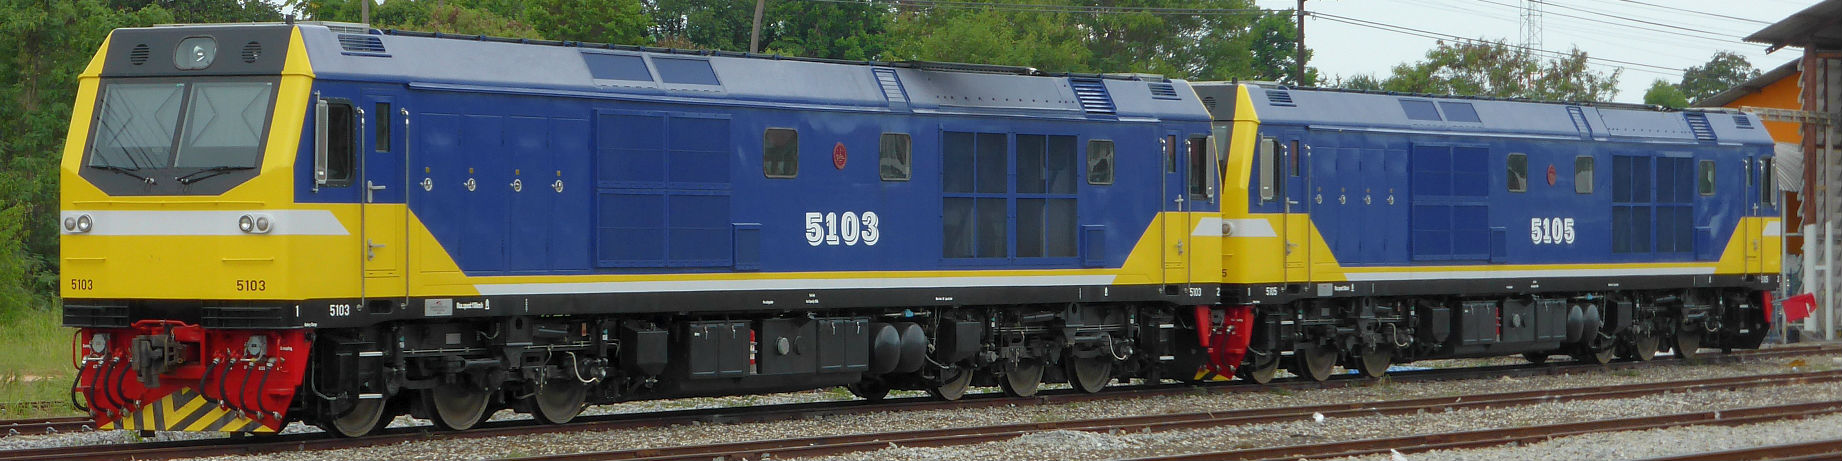 Qisuyan (2015) Locomotive Stock - Engine 5103